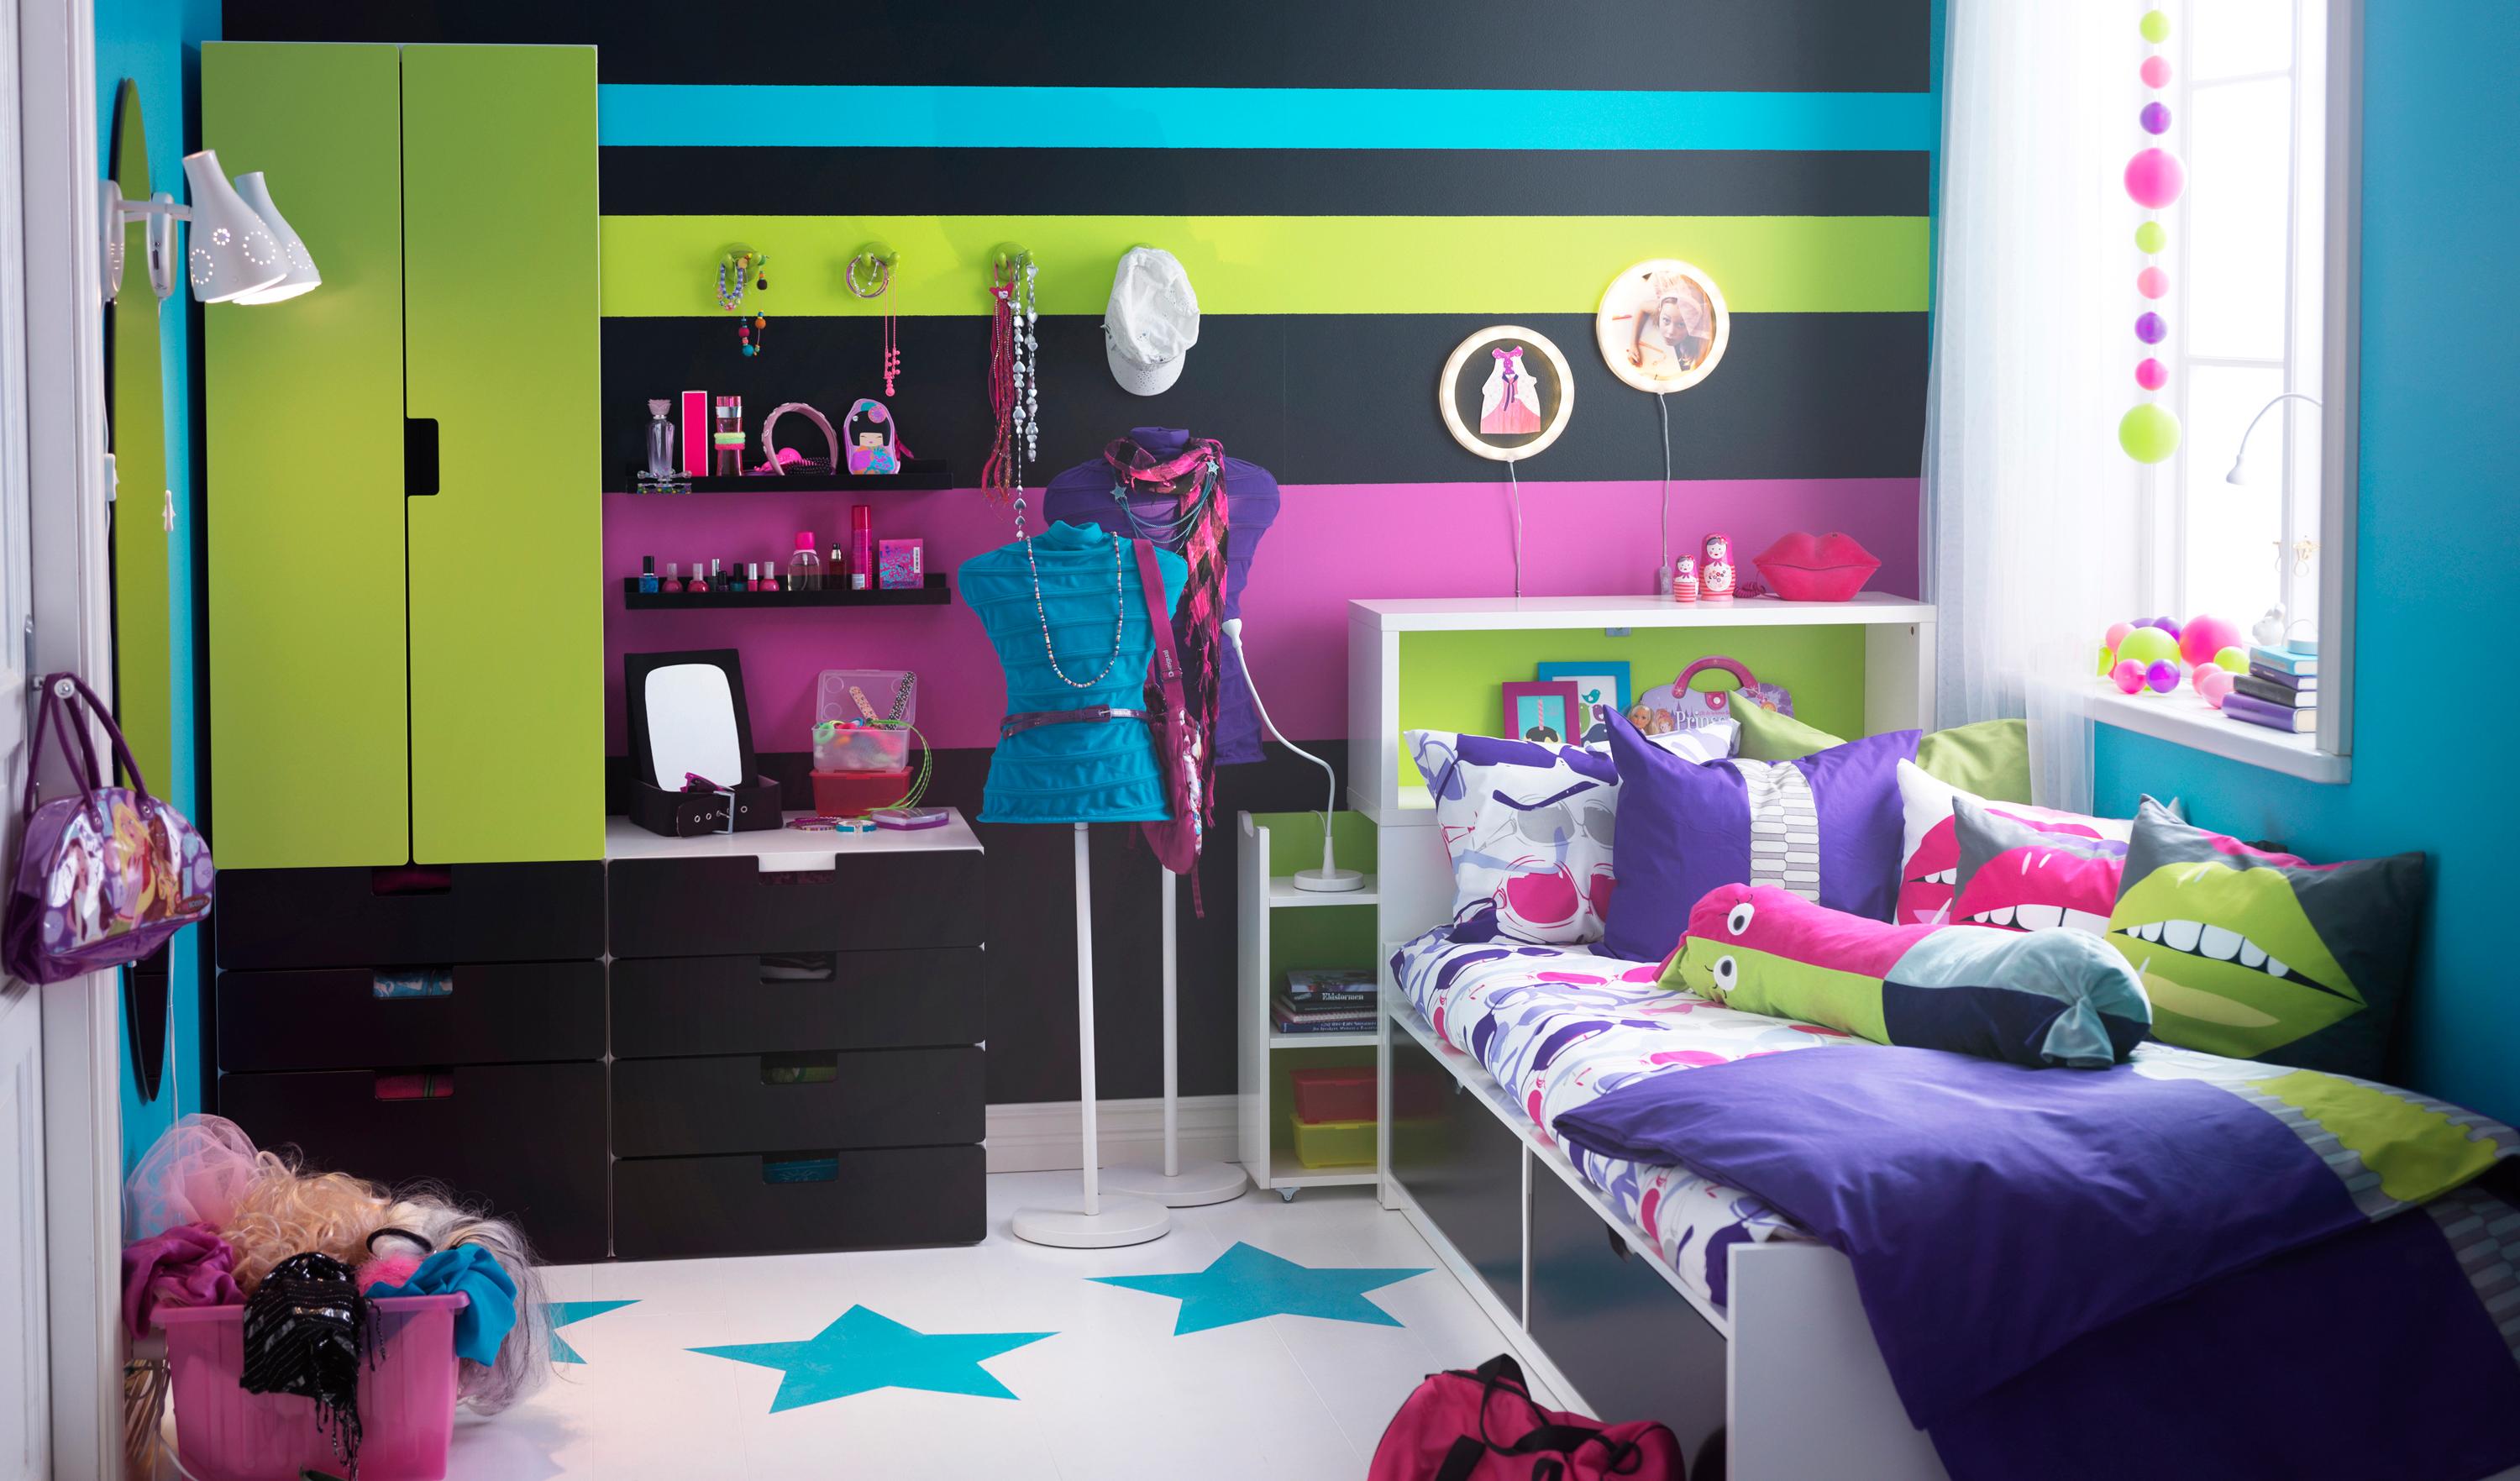 Jugendzimmer in Neonfarben #bett #wandfarbe #wandgestaltung #jugendzimmer #kommode #ikea #kleiderschrank #jugendbett #designwand ©Inter IKEA Systems B.V.